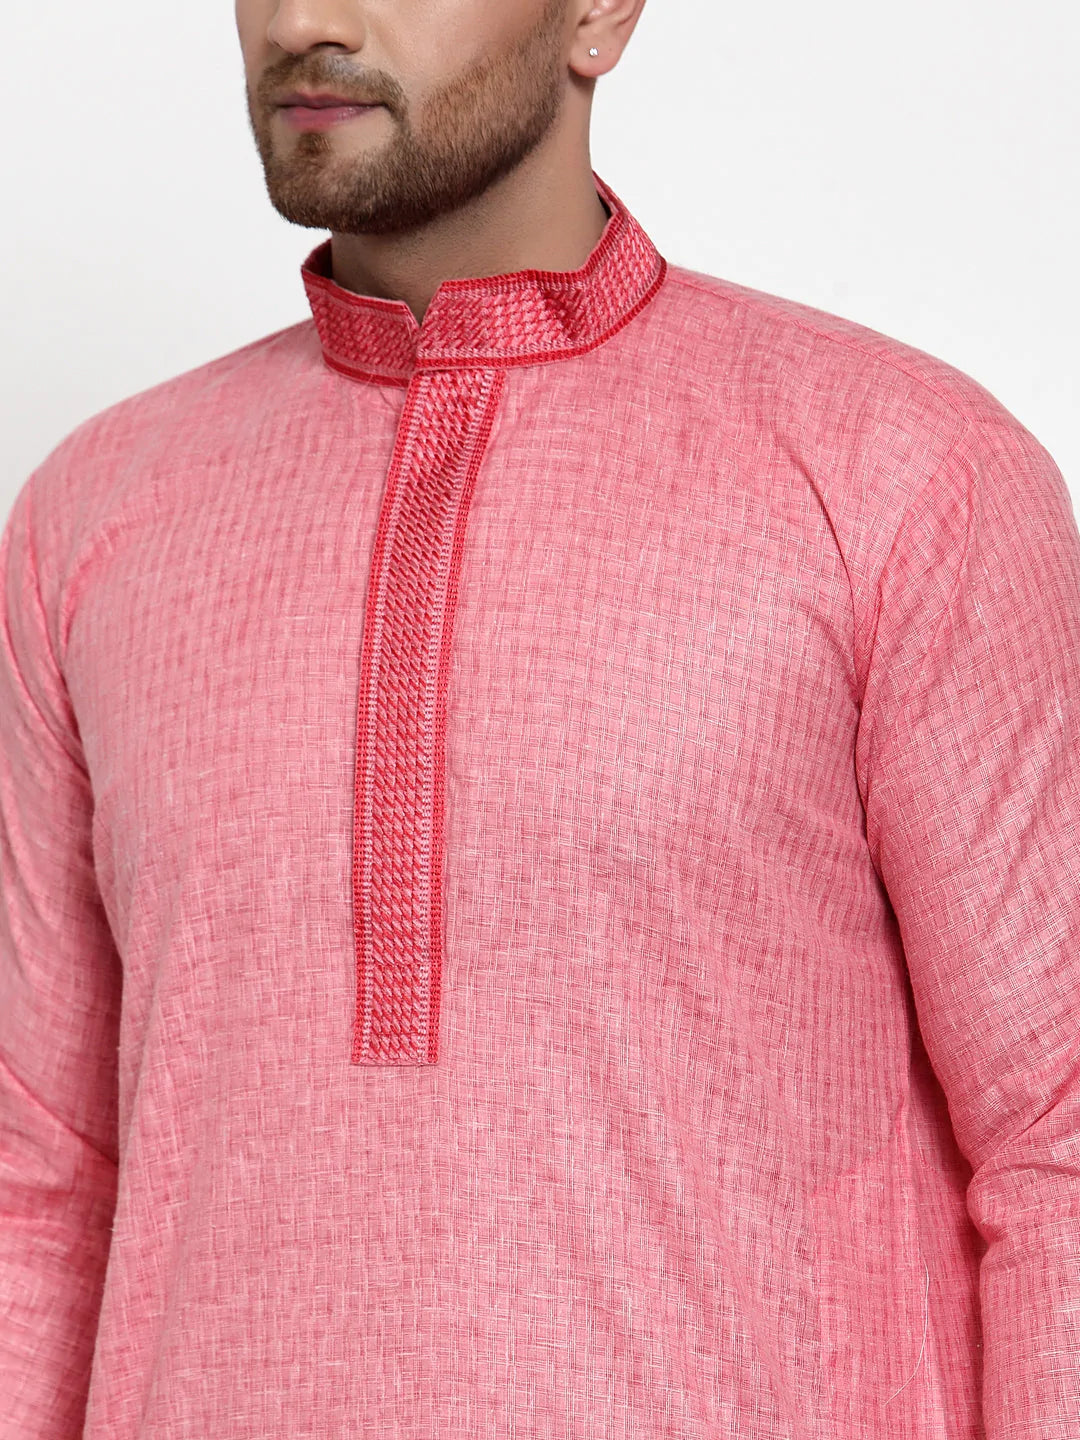 Men's Pink Cotton Woven Kurta Top